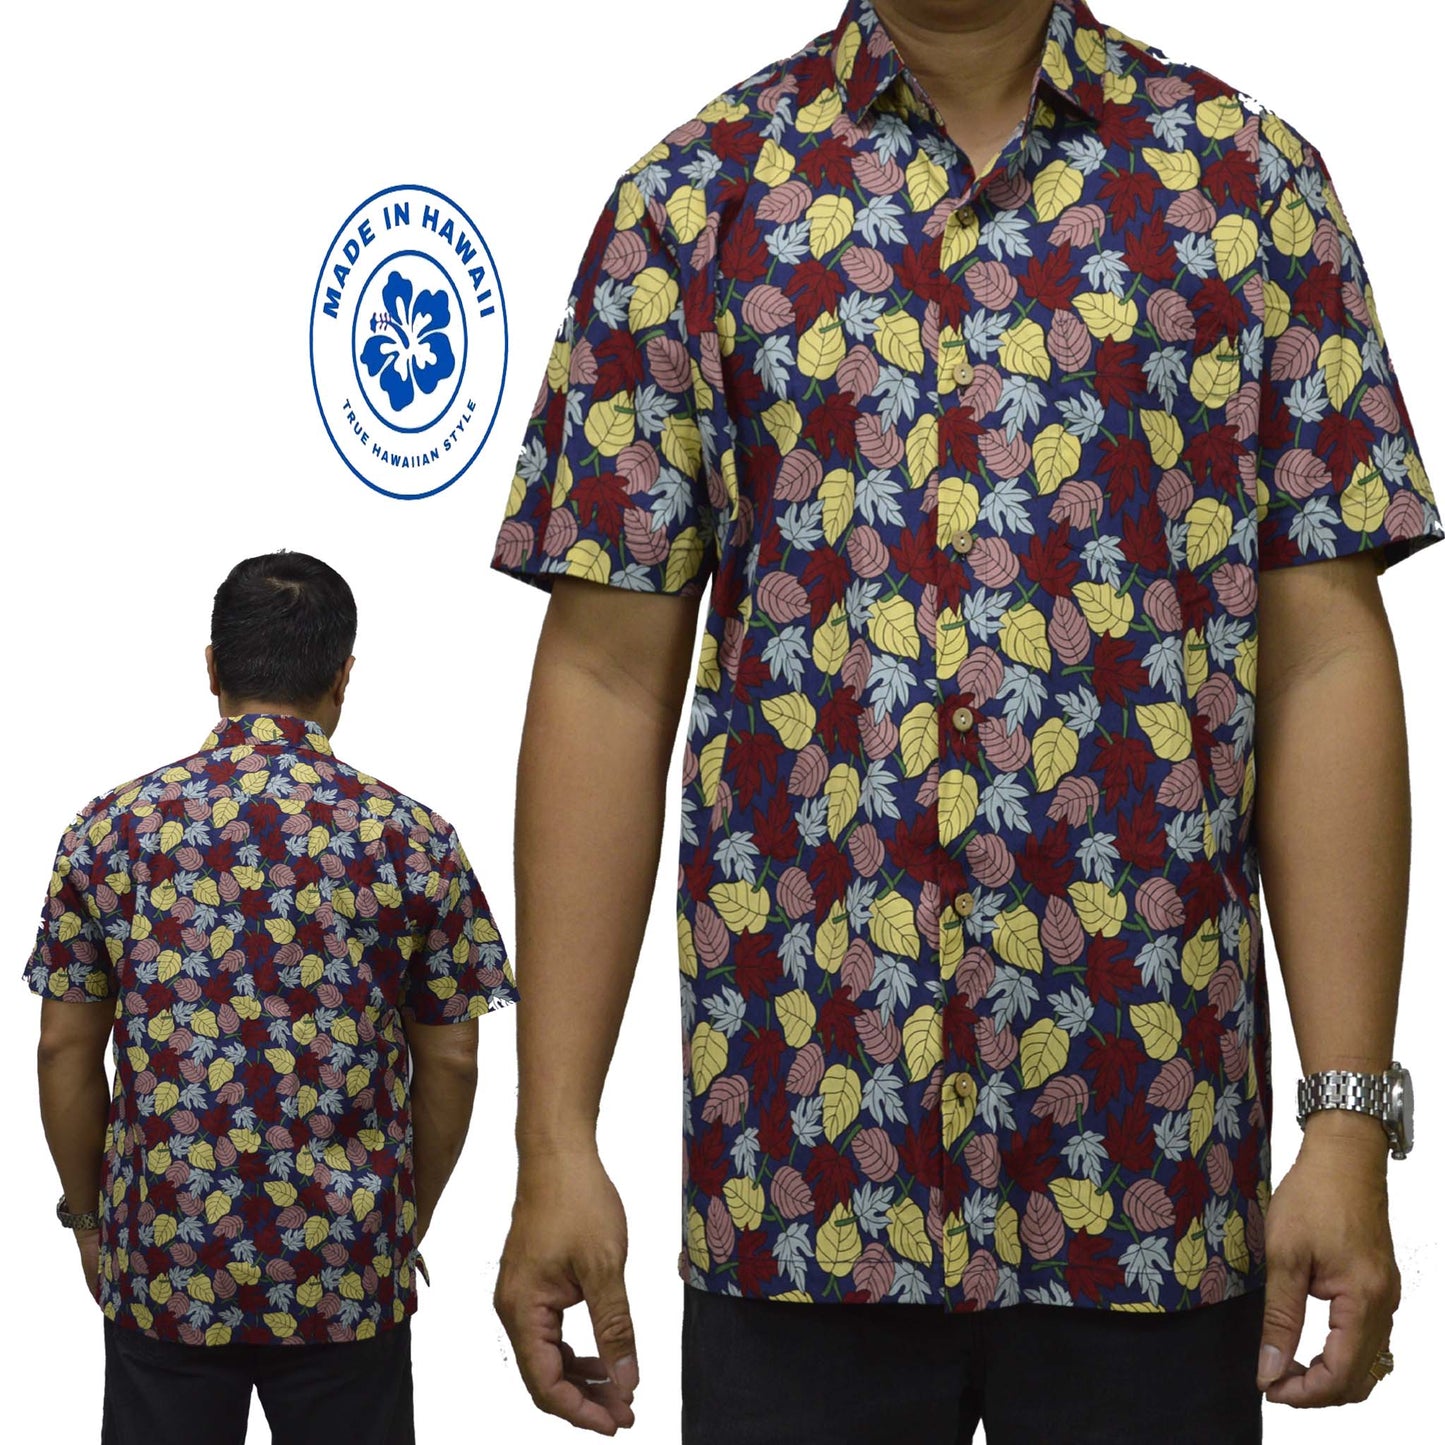 Cotton Hawaiian Performance Shirt with Hibiscus Print Made in Hawaii